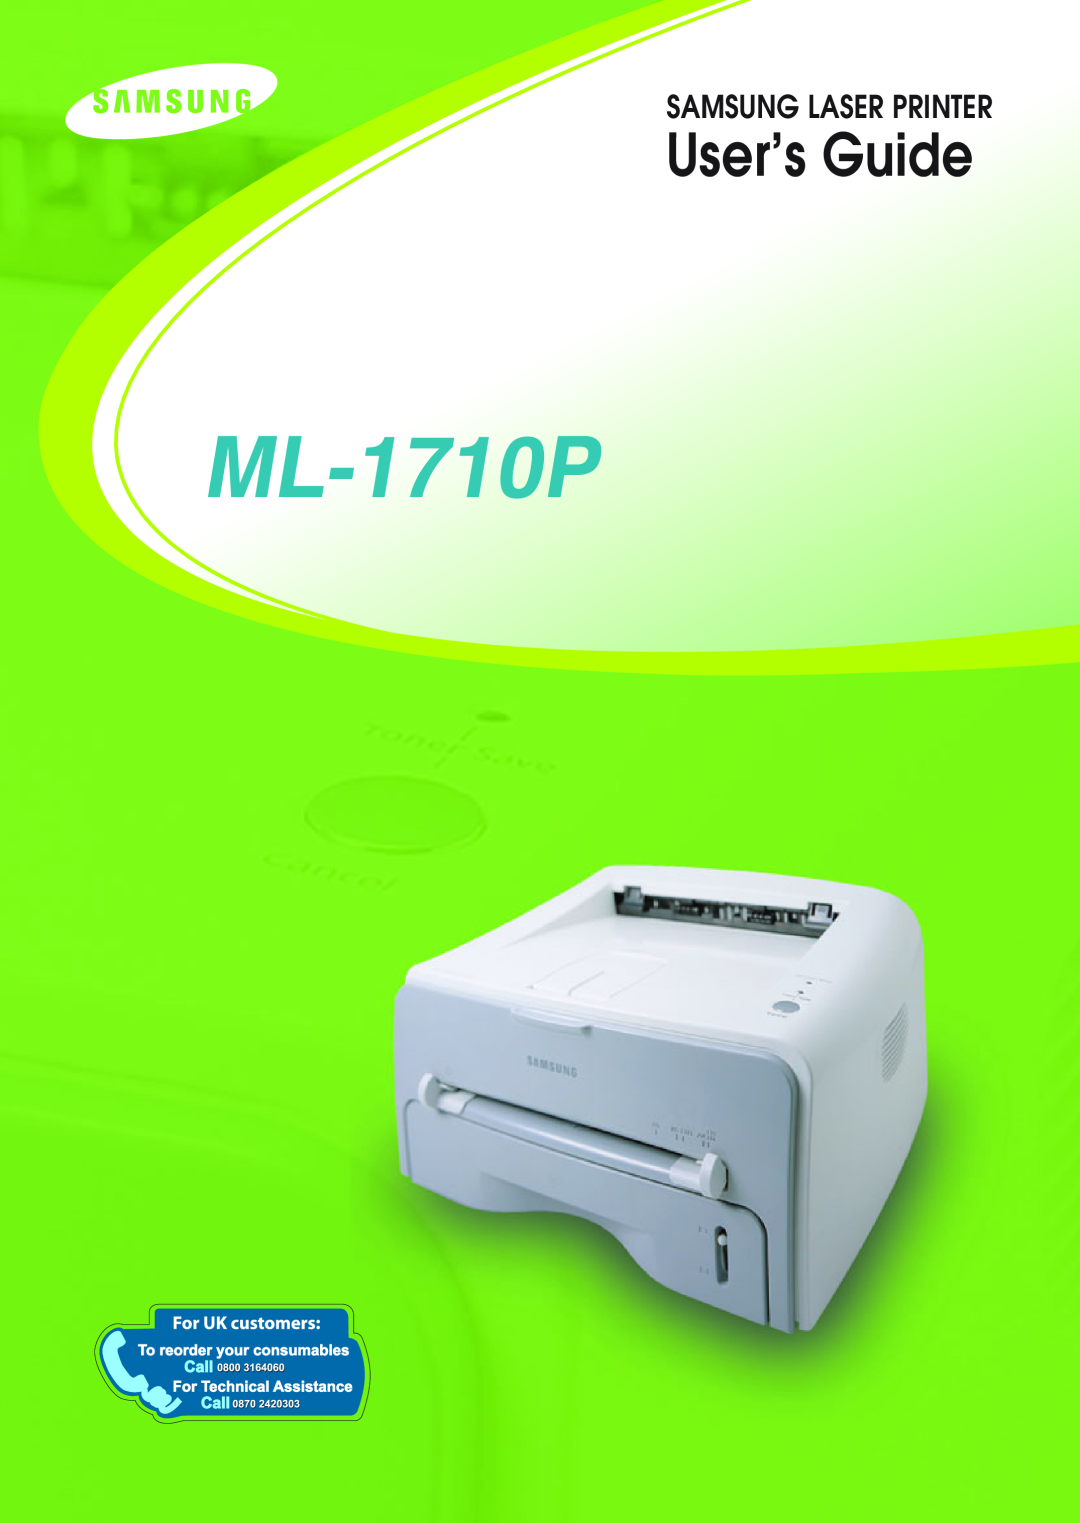 Samsung ML-1710P manual User’s Guide, Samsung Laser Printer 